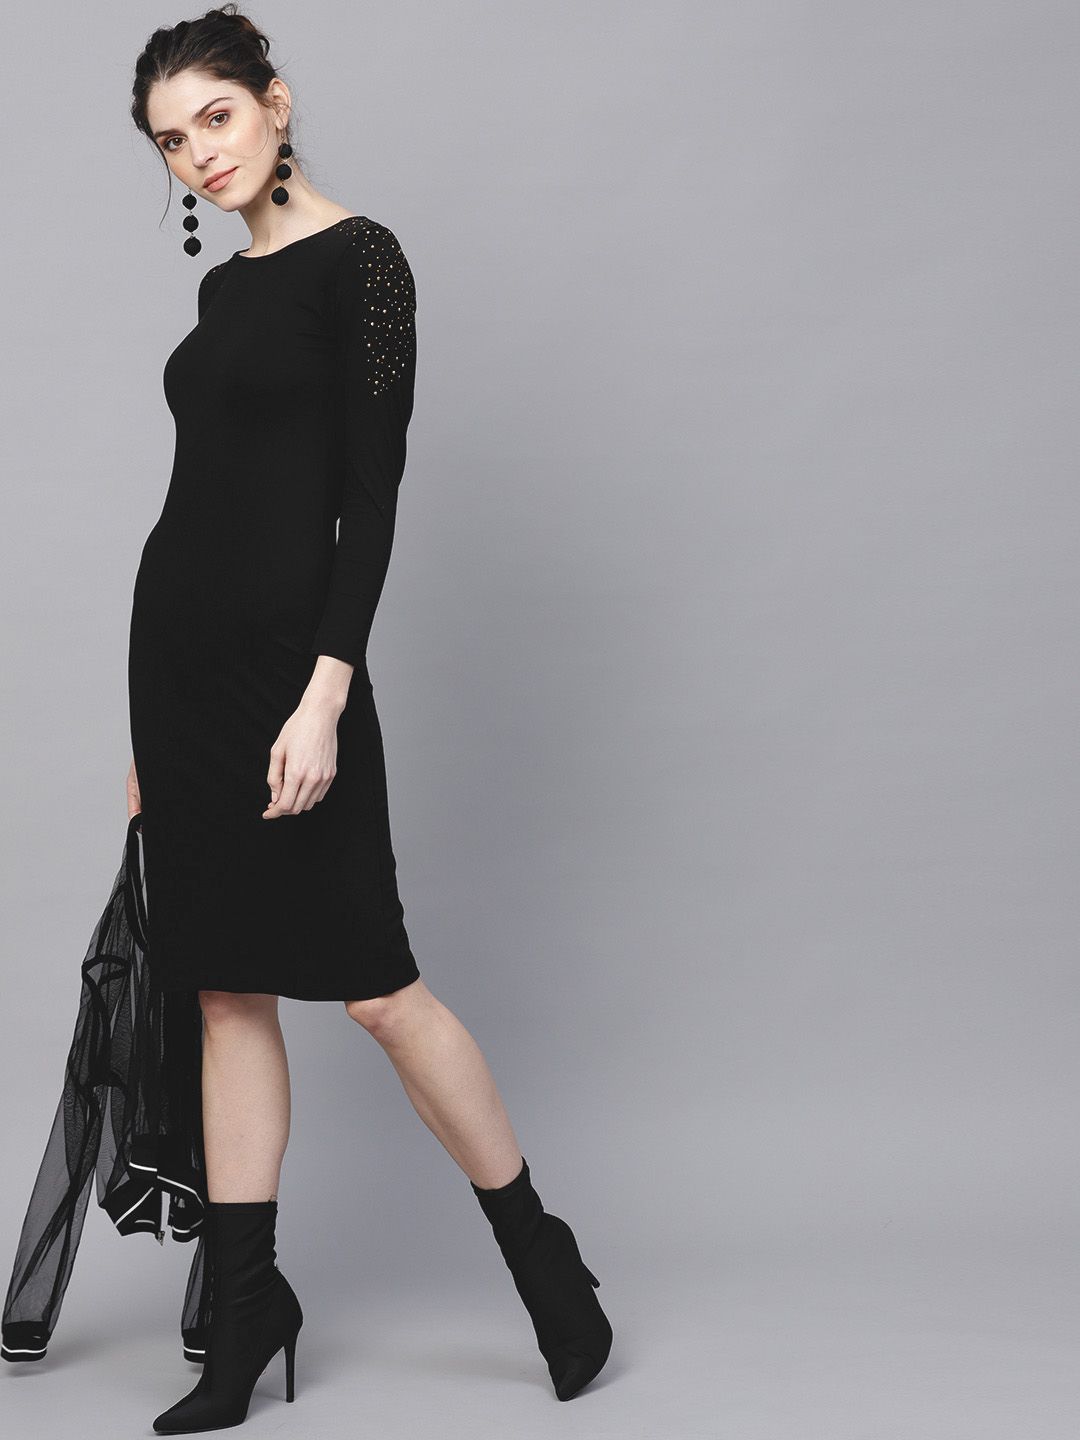 SASSAFRAS Black Stretchable Bodycon Dress Price in India